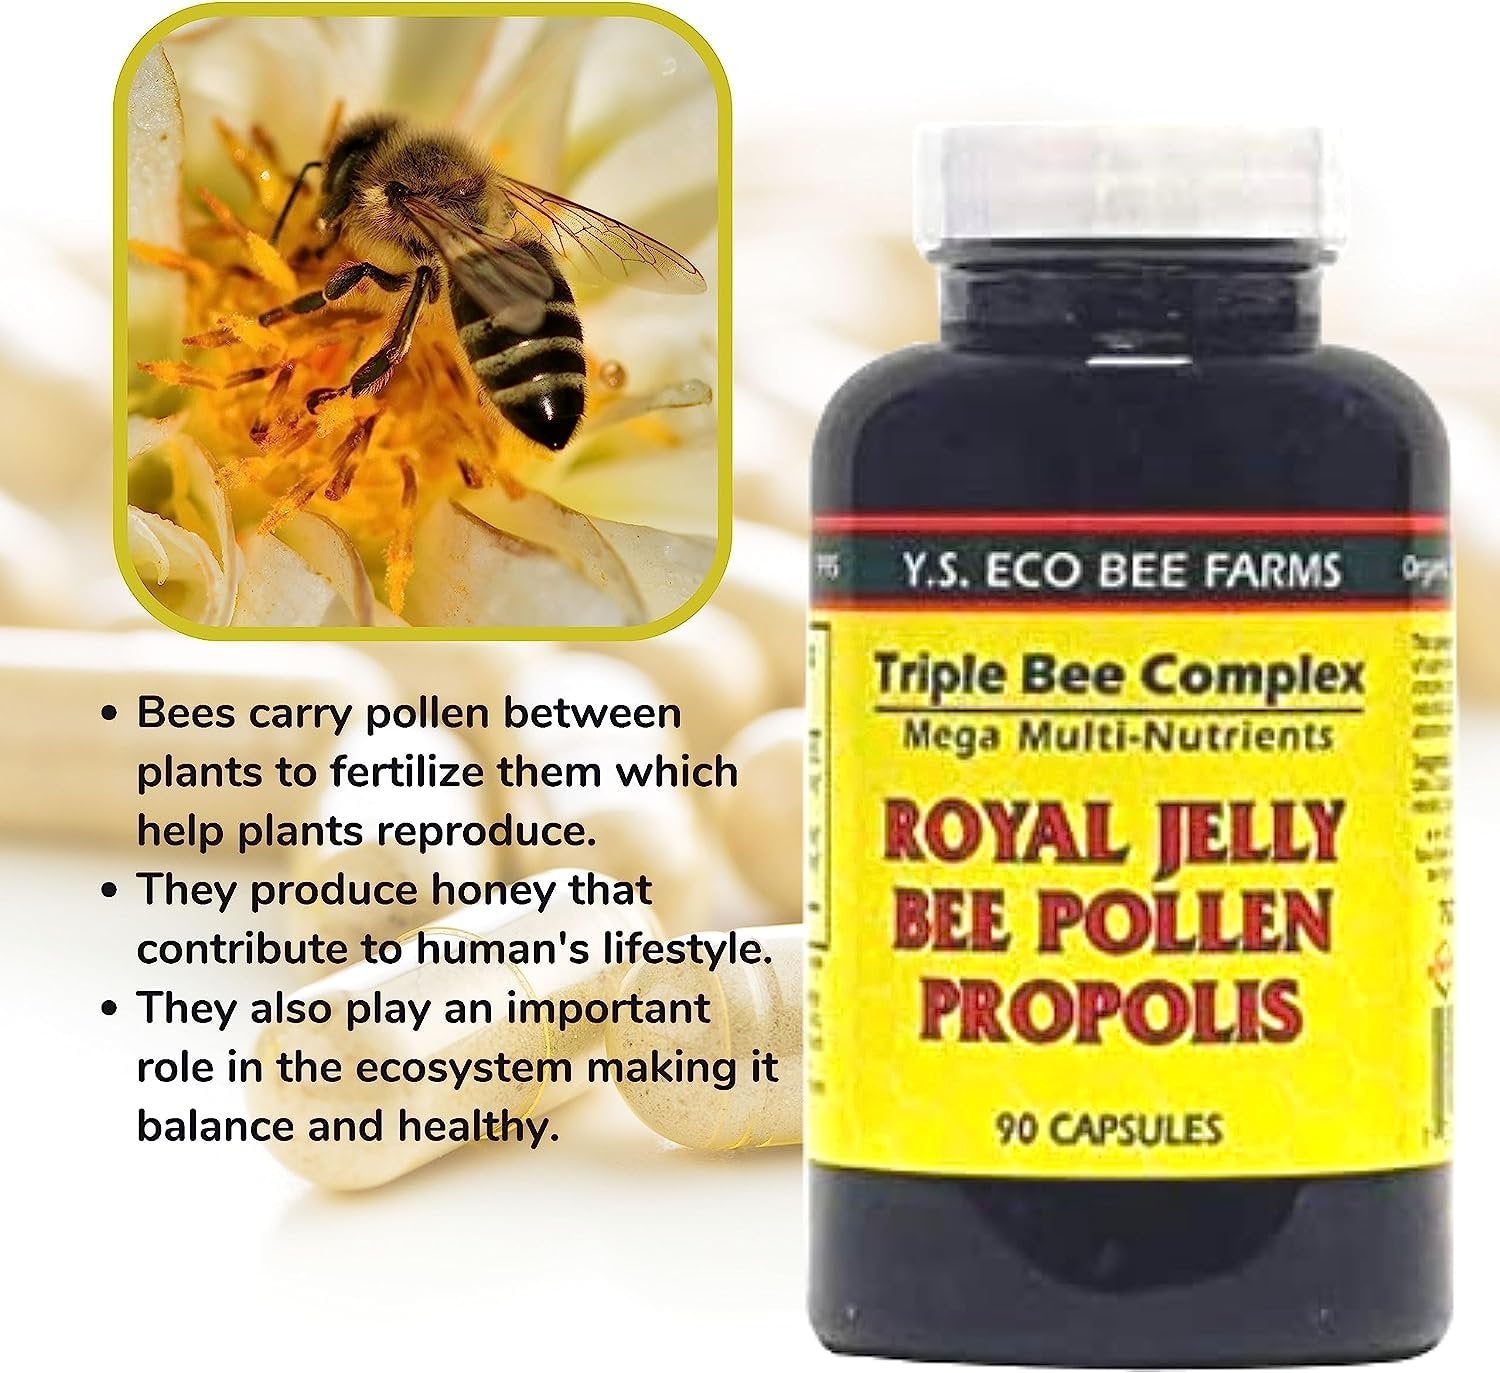 YS Organics Bee Farm Triple Bee Complex Mega Multi-Nutrients - Royal Jelly, Bee Pollen, Propolis - 90 Capsules - with Multi-Purpose Key Chain